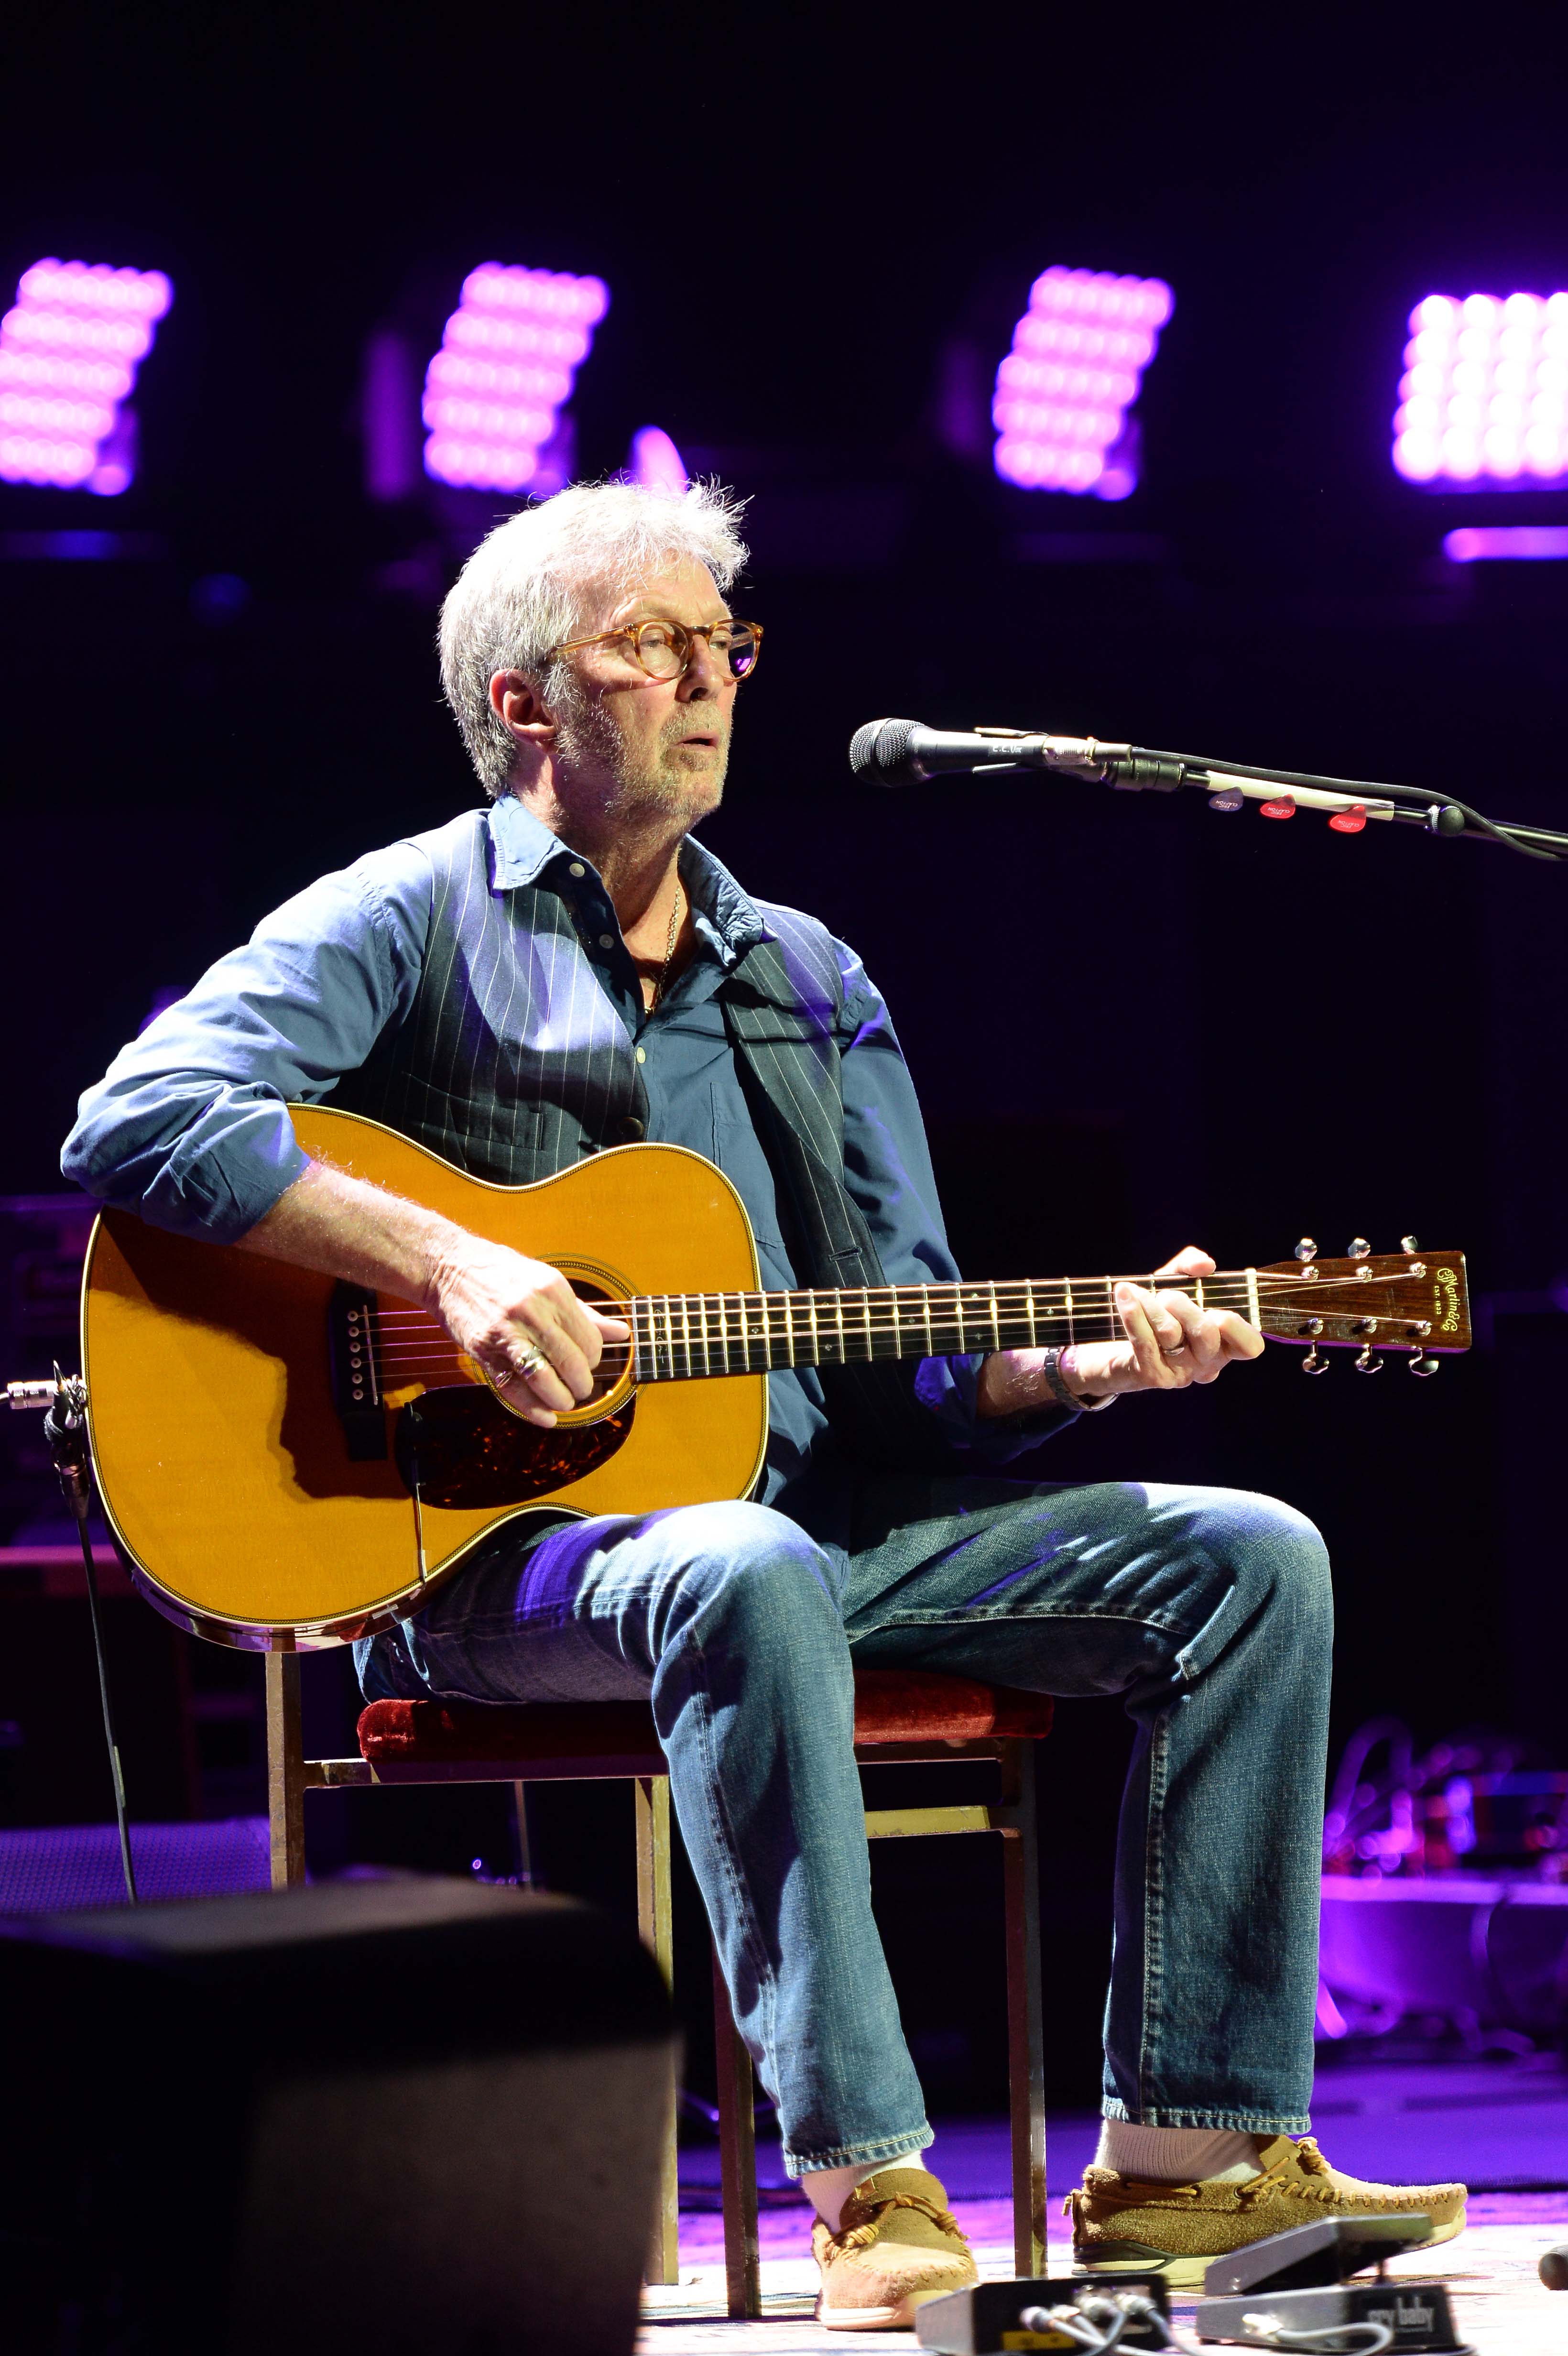 Eric Clapton 2019 武道館公演限定 Martinコラボストラップ 器材